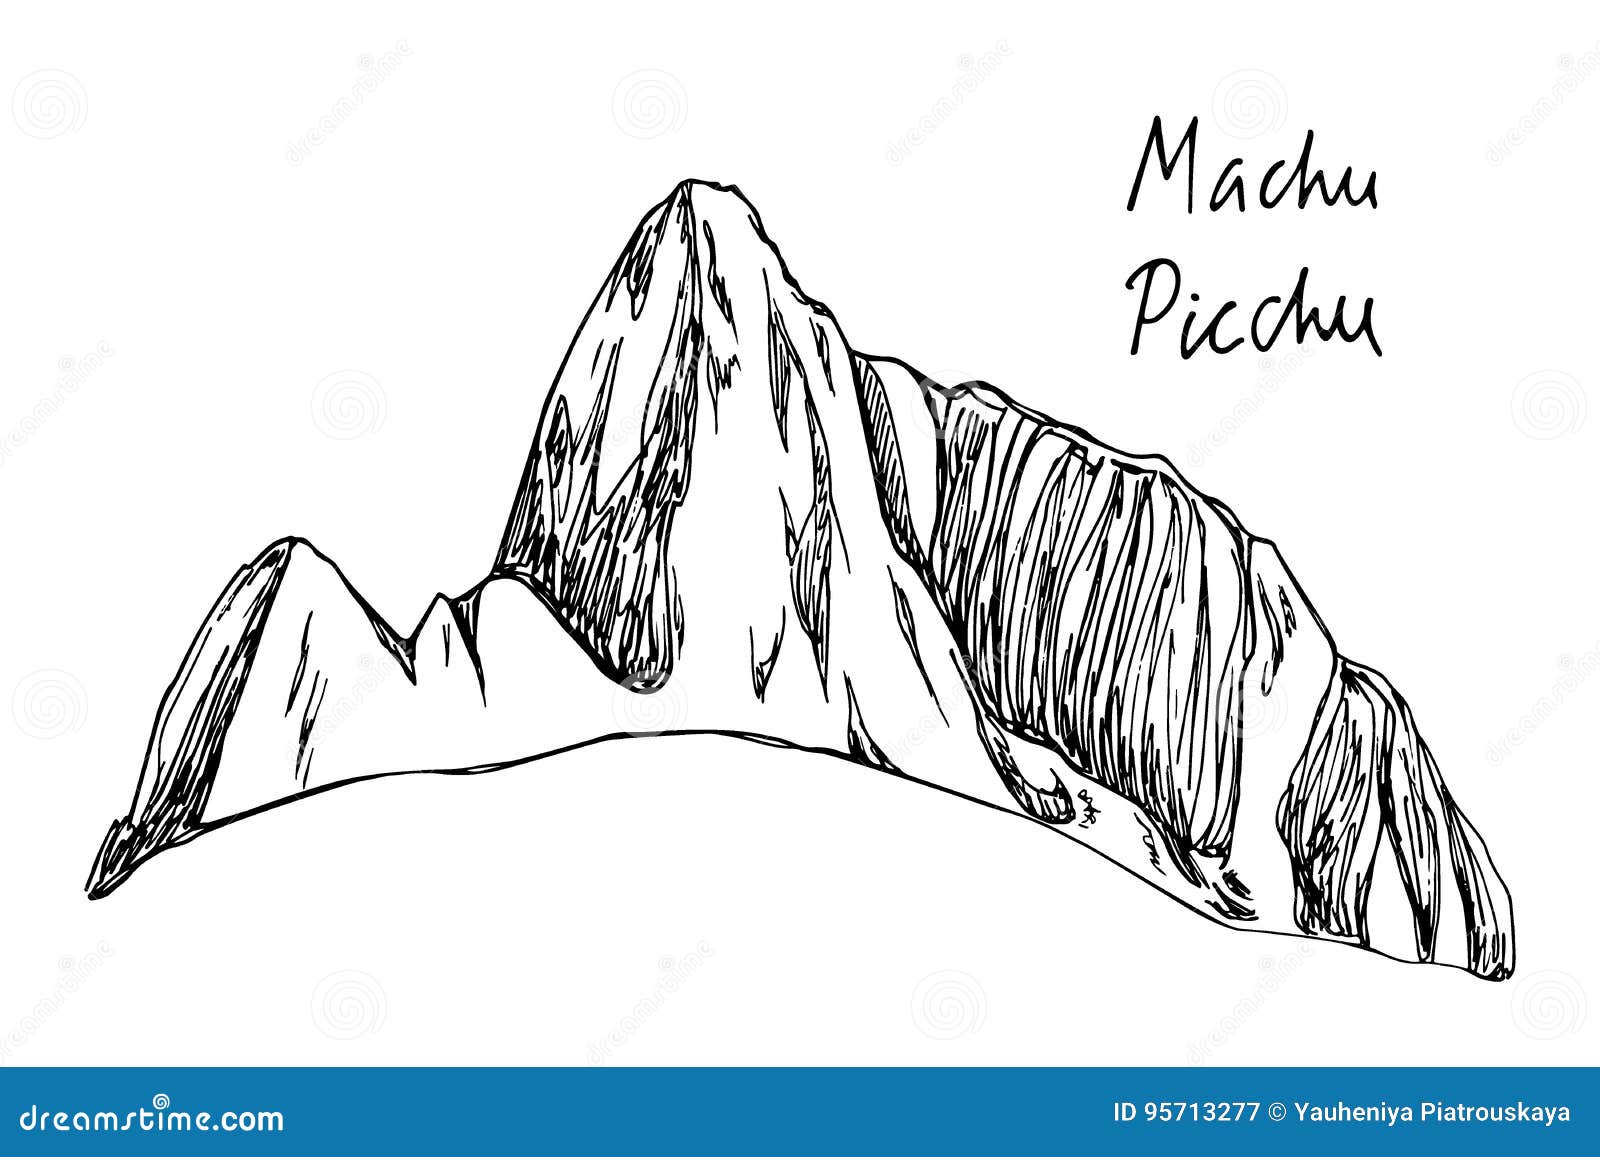 How to draw Machu Picchu, Peru - YouTube